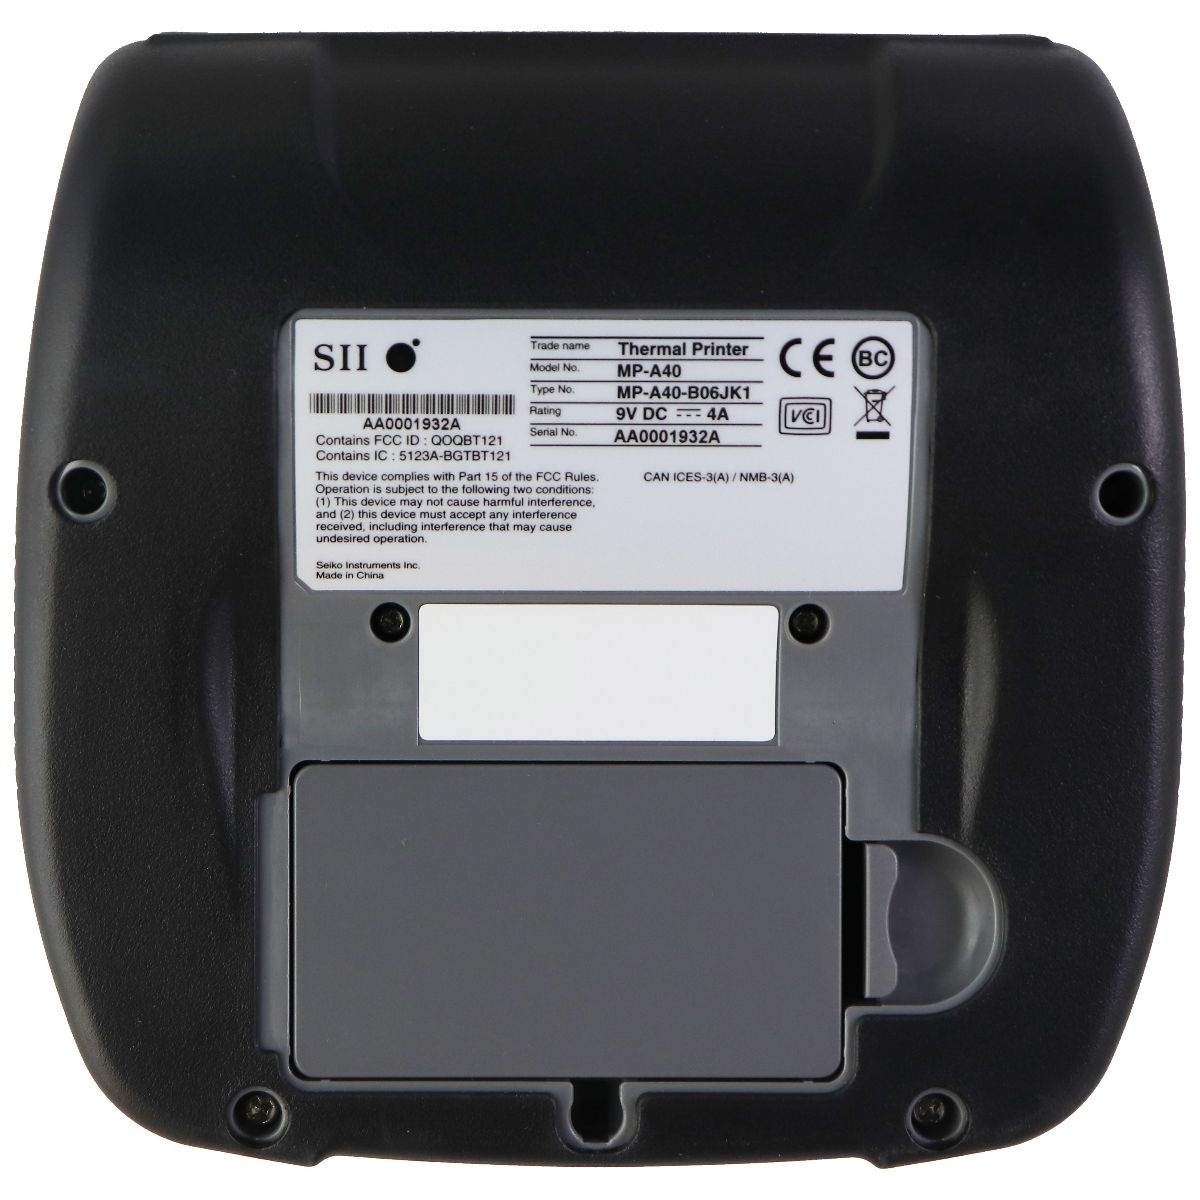 Seiko SII (MP-A40) Mobile Bluetooth Thermal Printer - Black